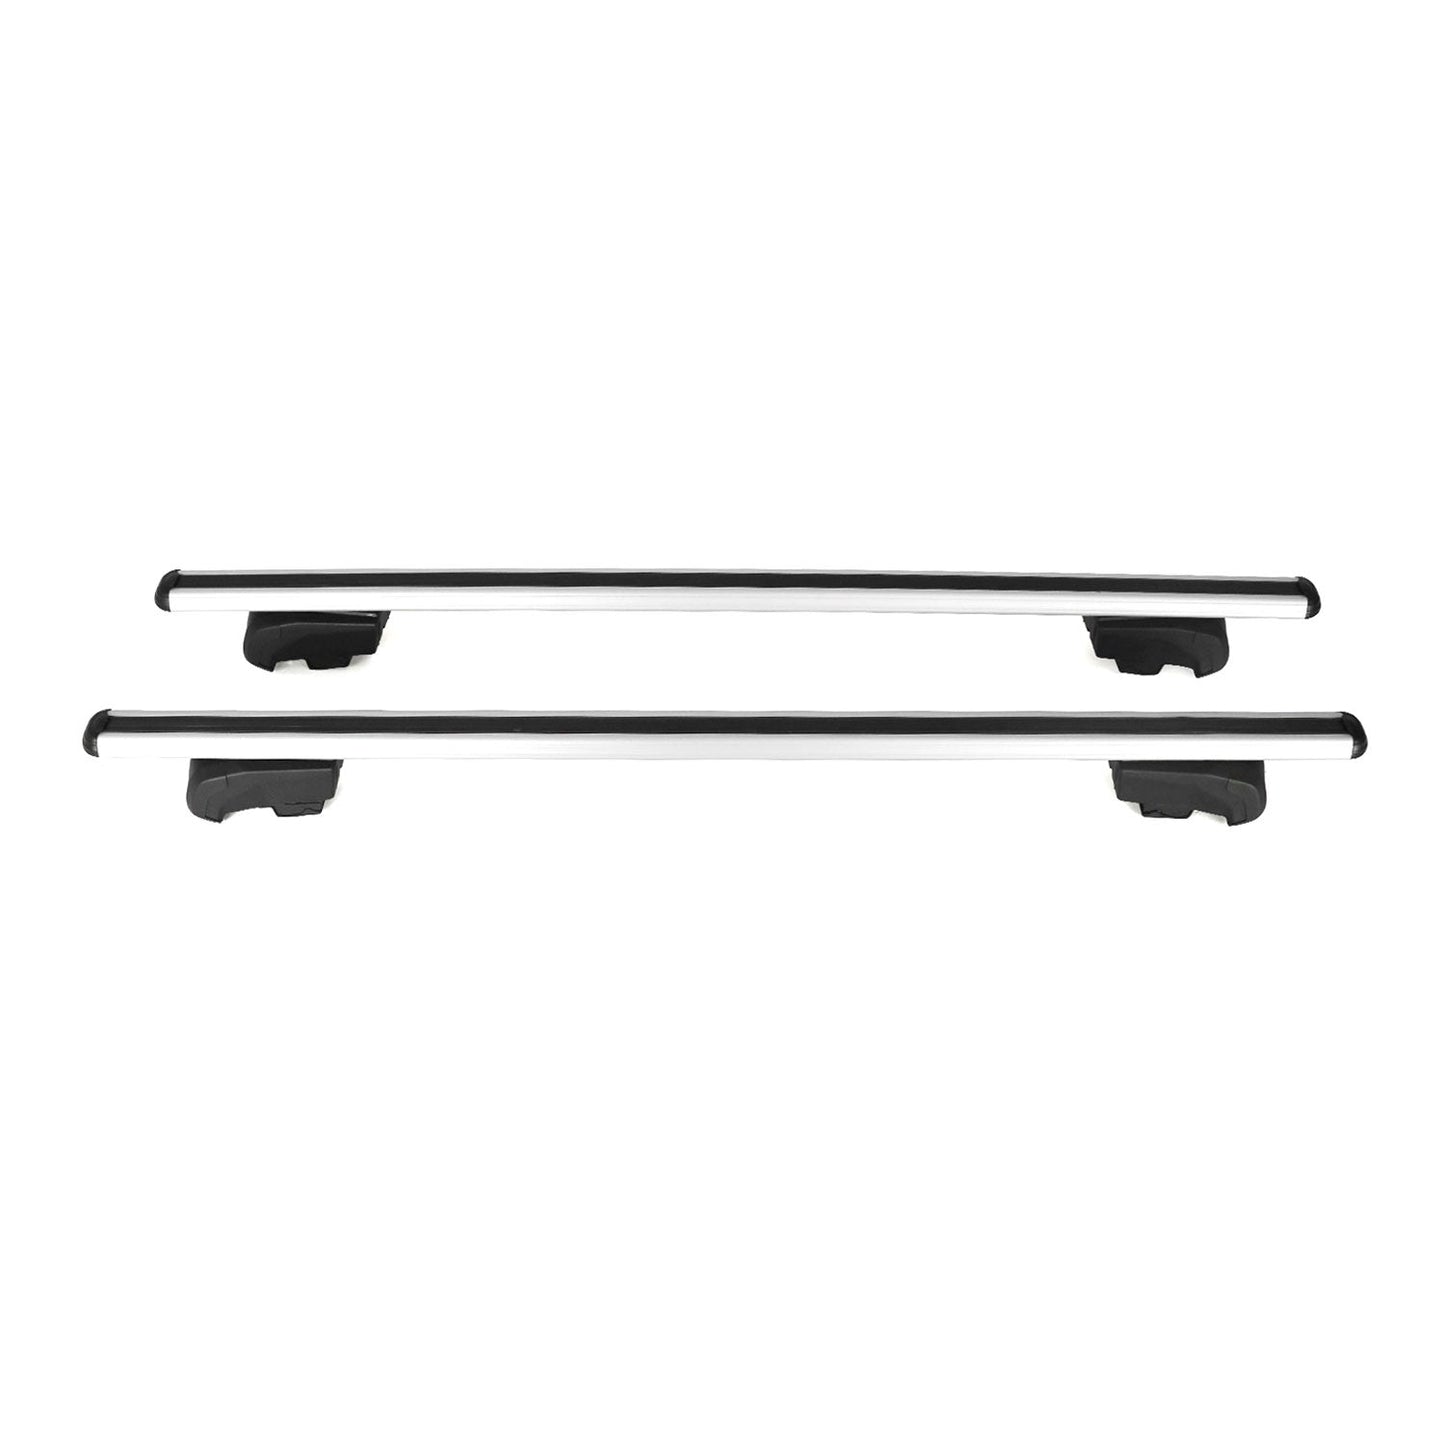 OMAC Lockable Roof Rack Cross Bars Luggage Carrier for Kia Niro 2023-2024 Gray 2Pcs G003030